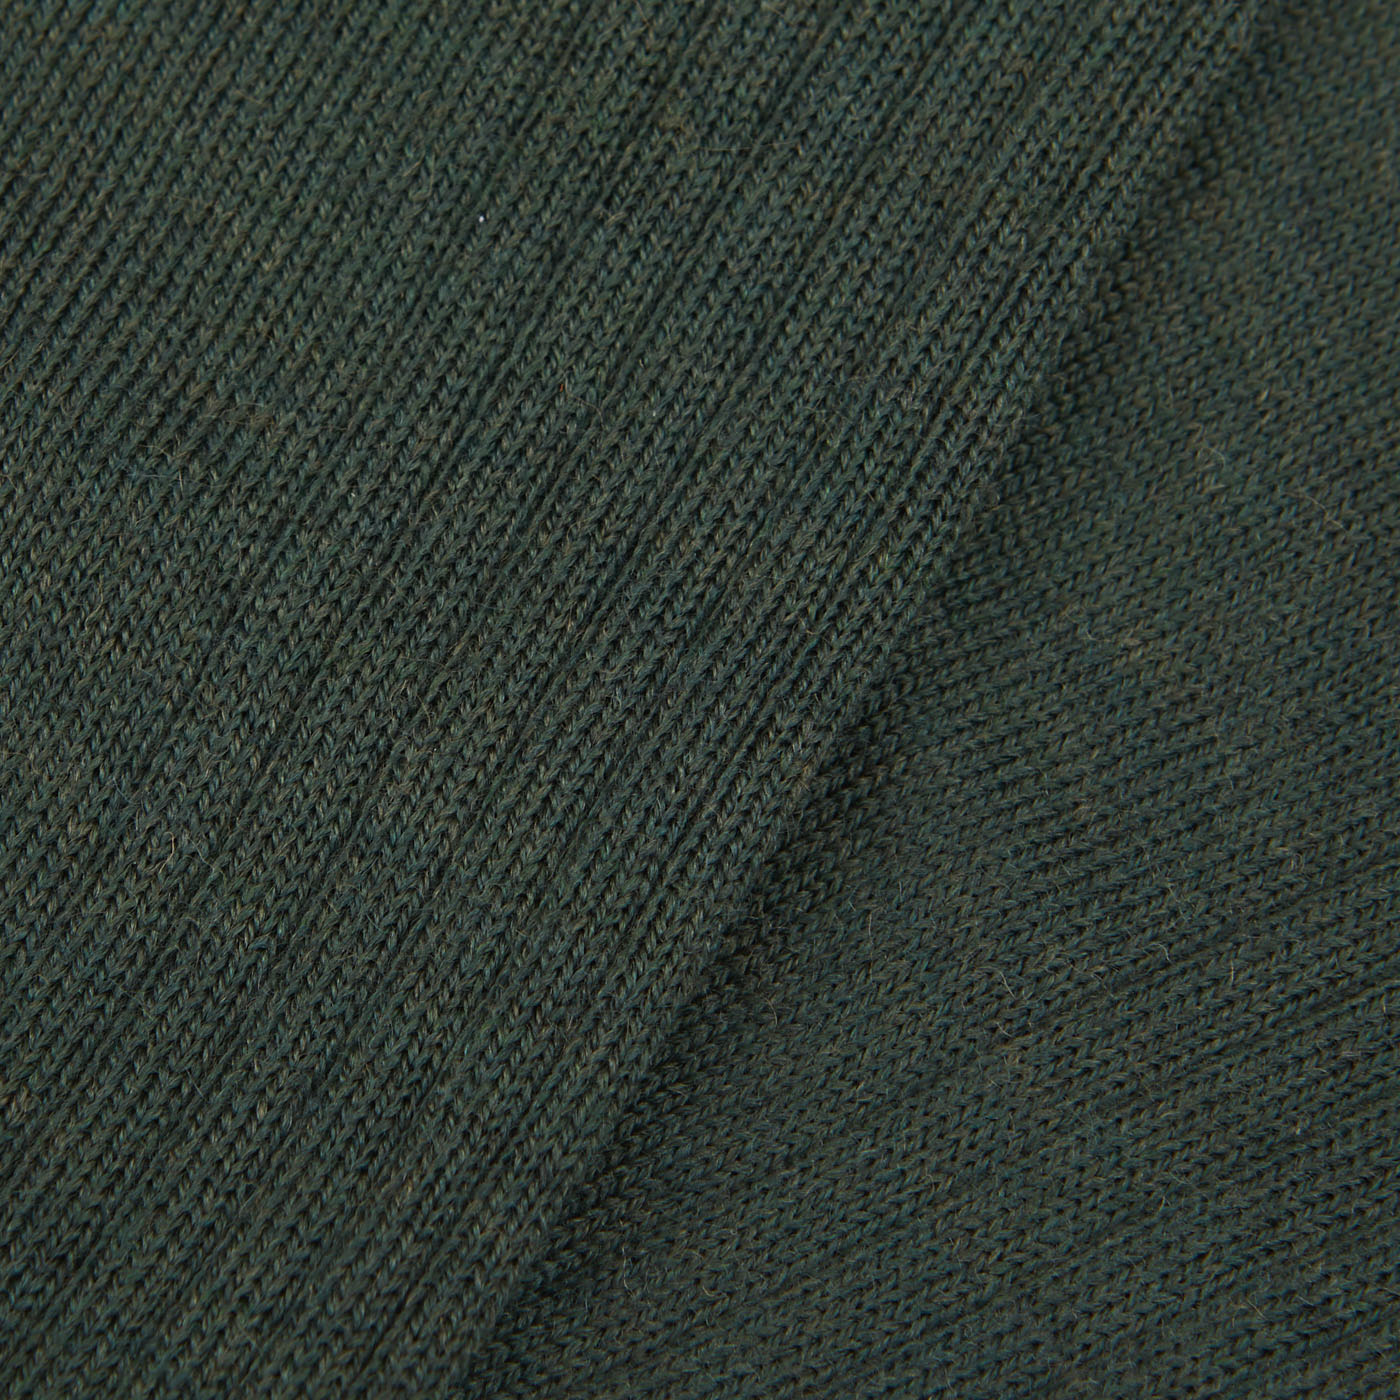 A close up of a hardwearing Thuya Green Merino Wool Ribbed Socks by Doré Doré.